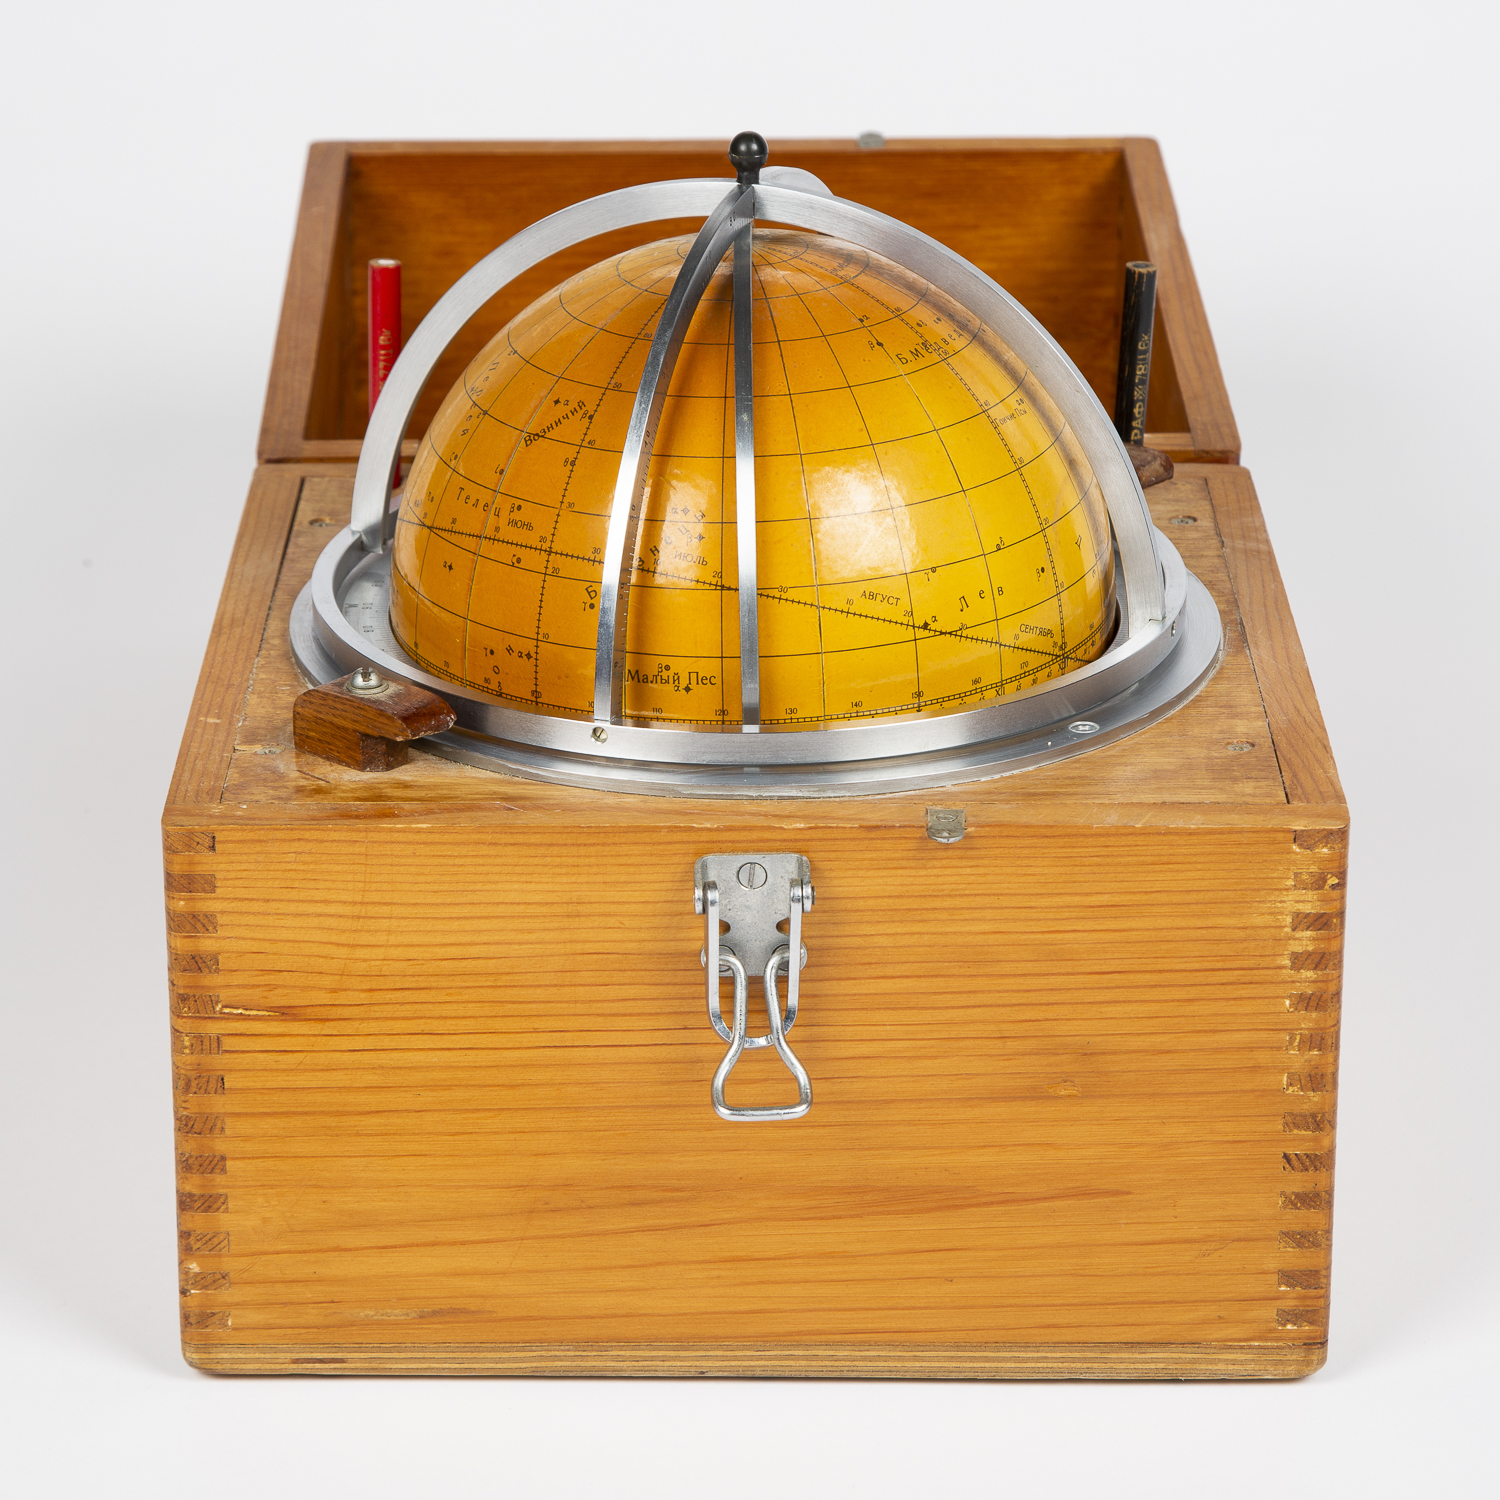 Star globe for celestial navigation. Dated 1979.